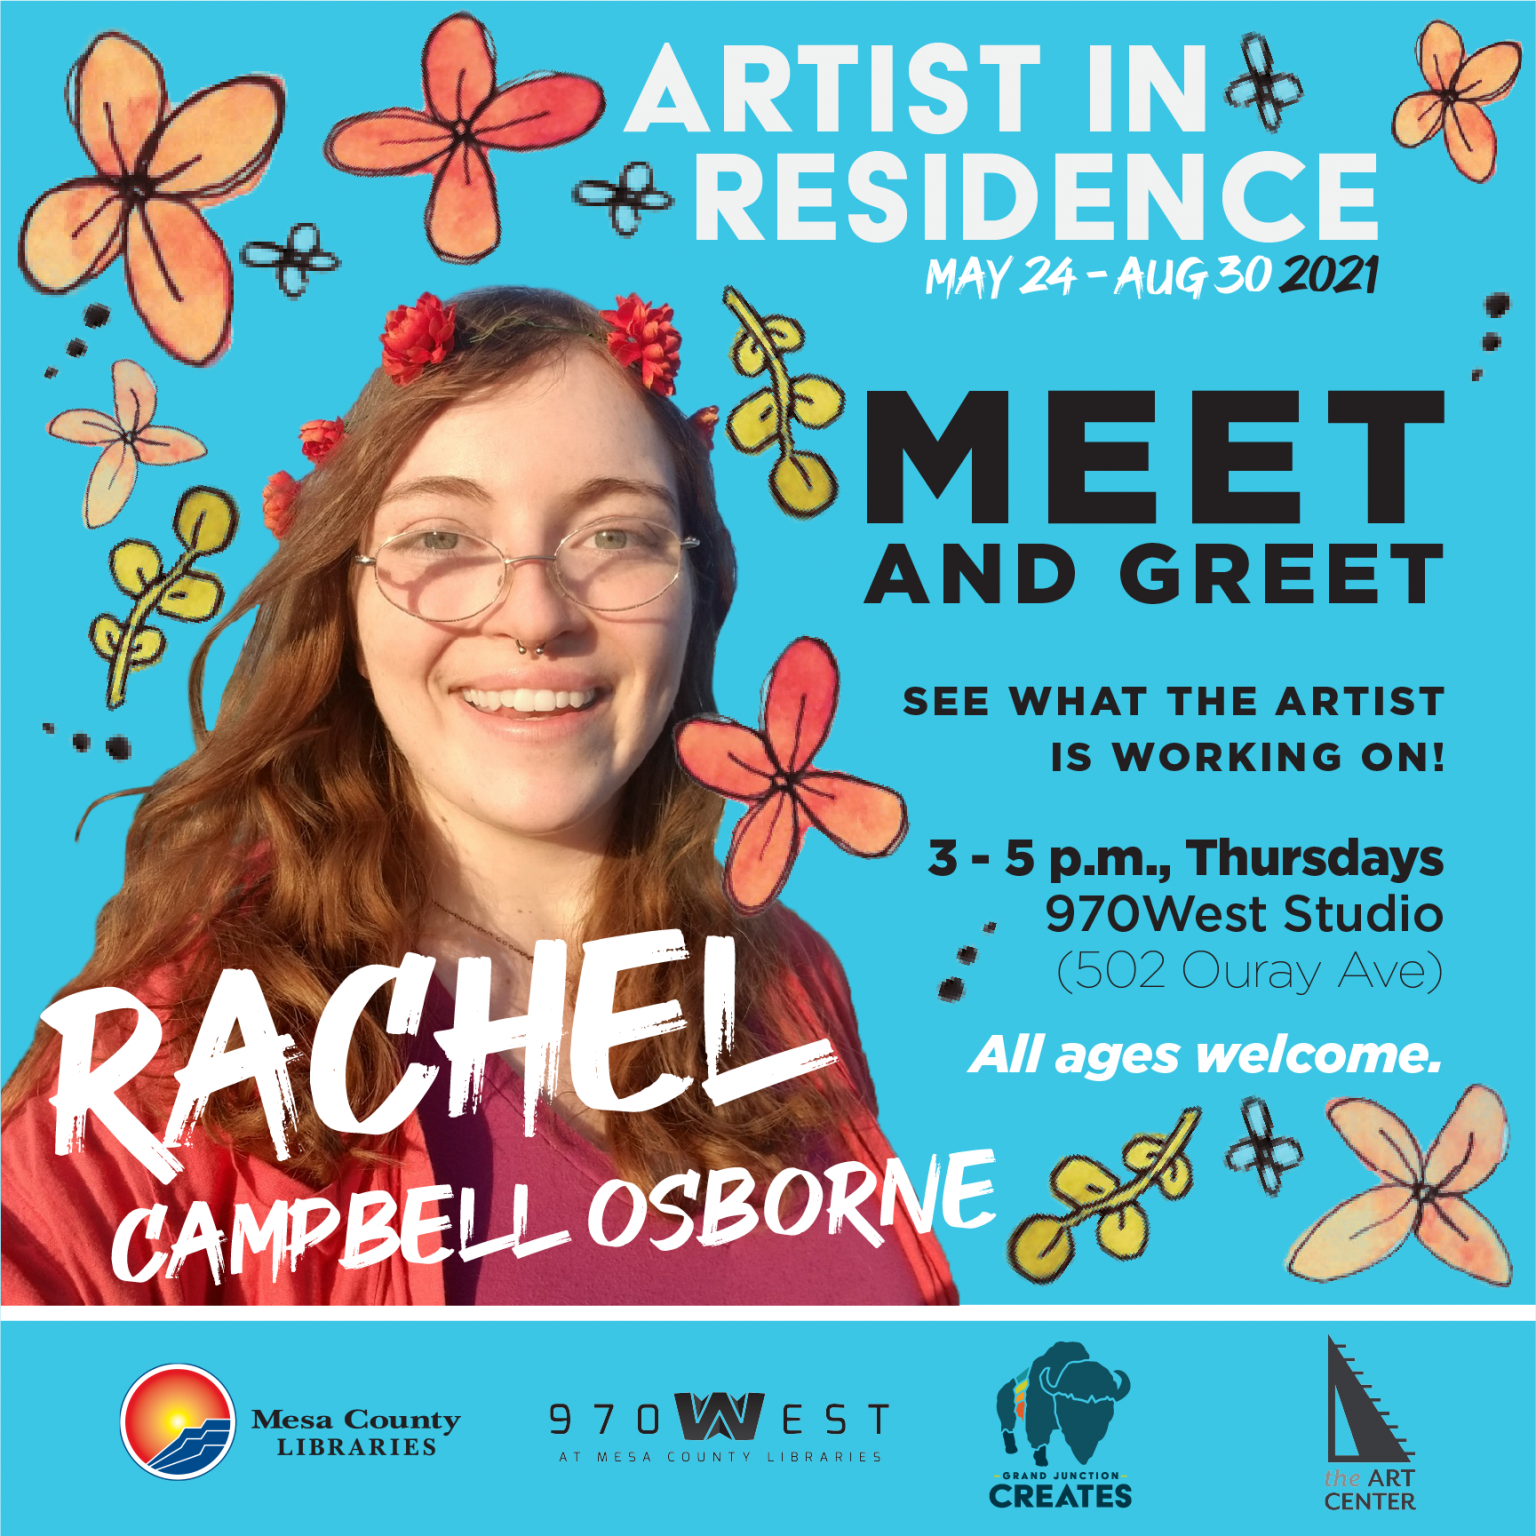 Graphic describing meet and greet studio hours for Artist in Residence Rachel Campbell Osborne